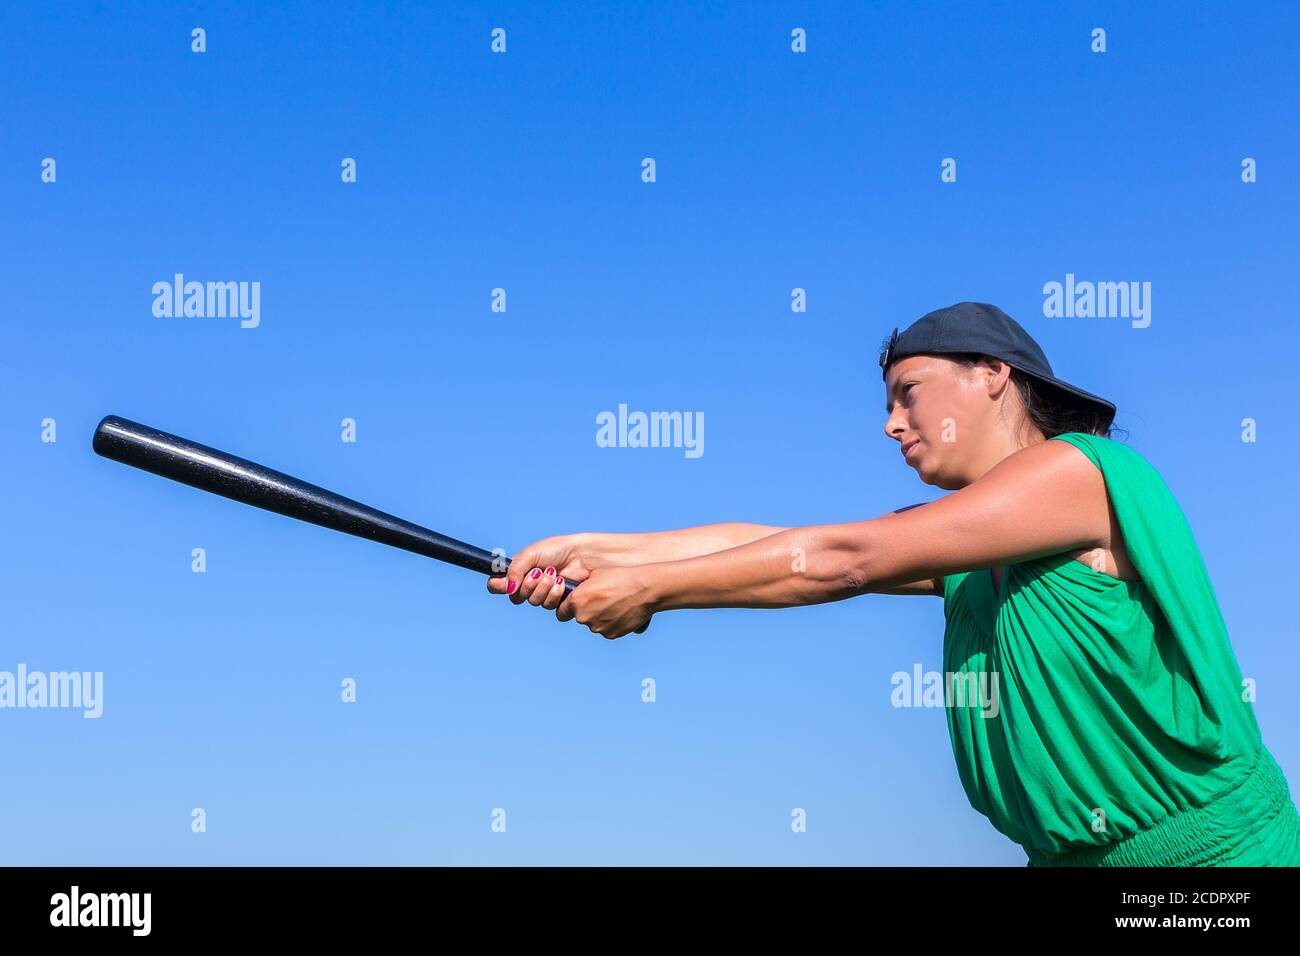 Woman with baseball bat body posture to strike Stock Photo